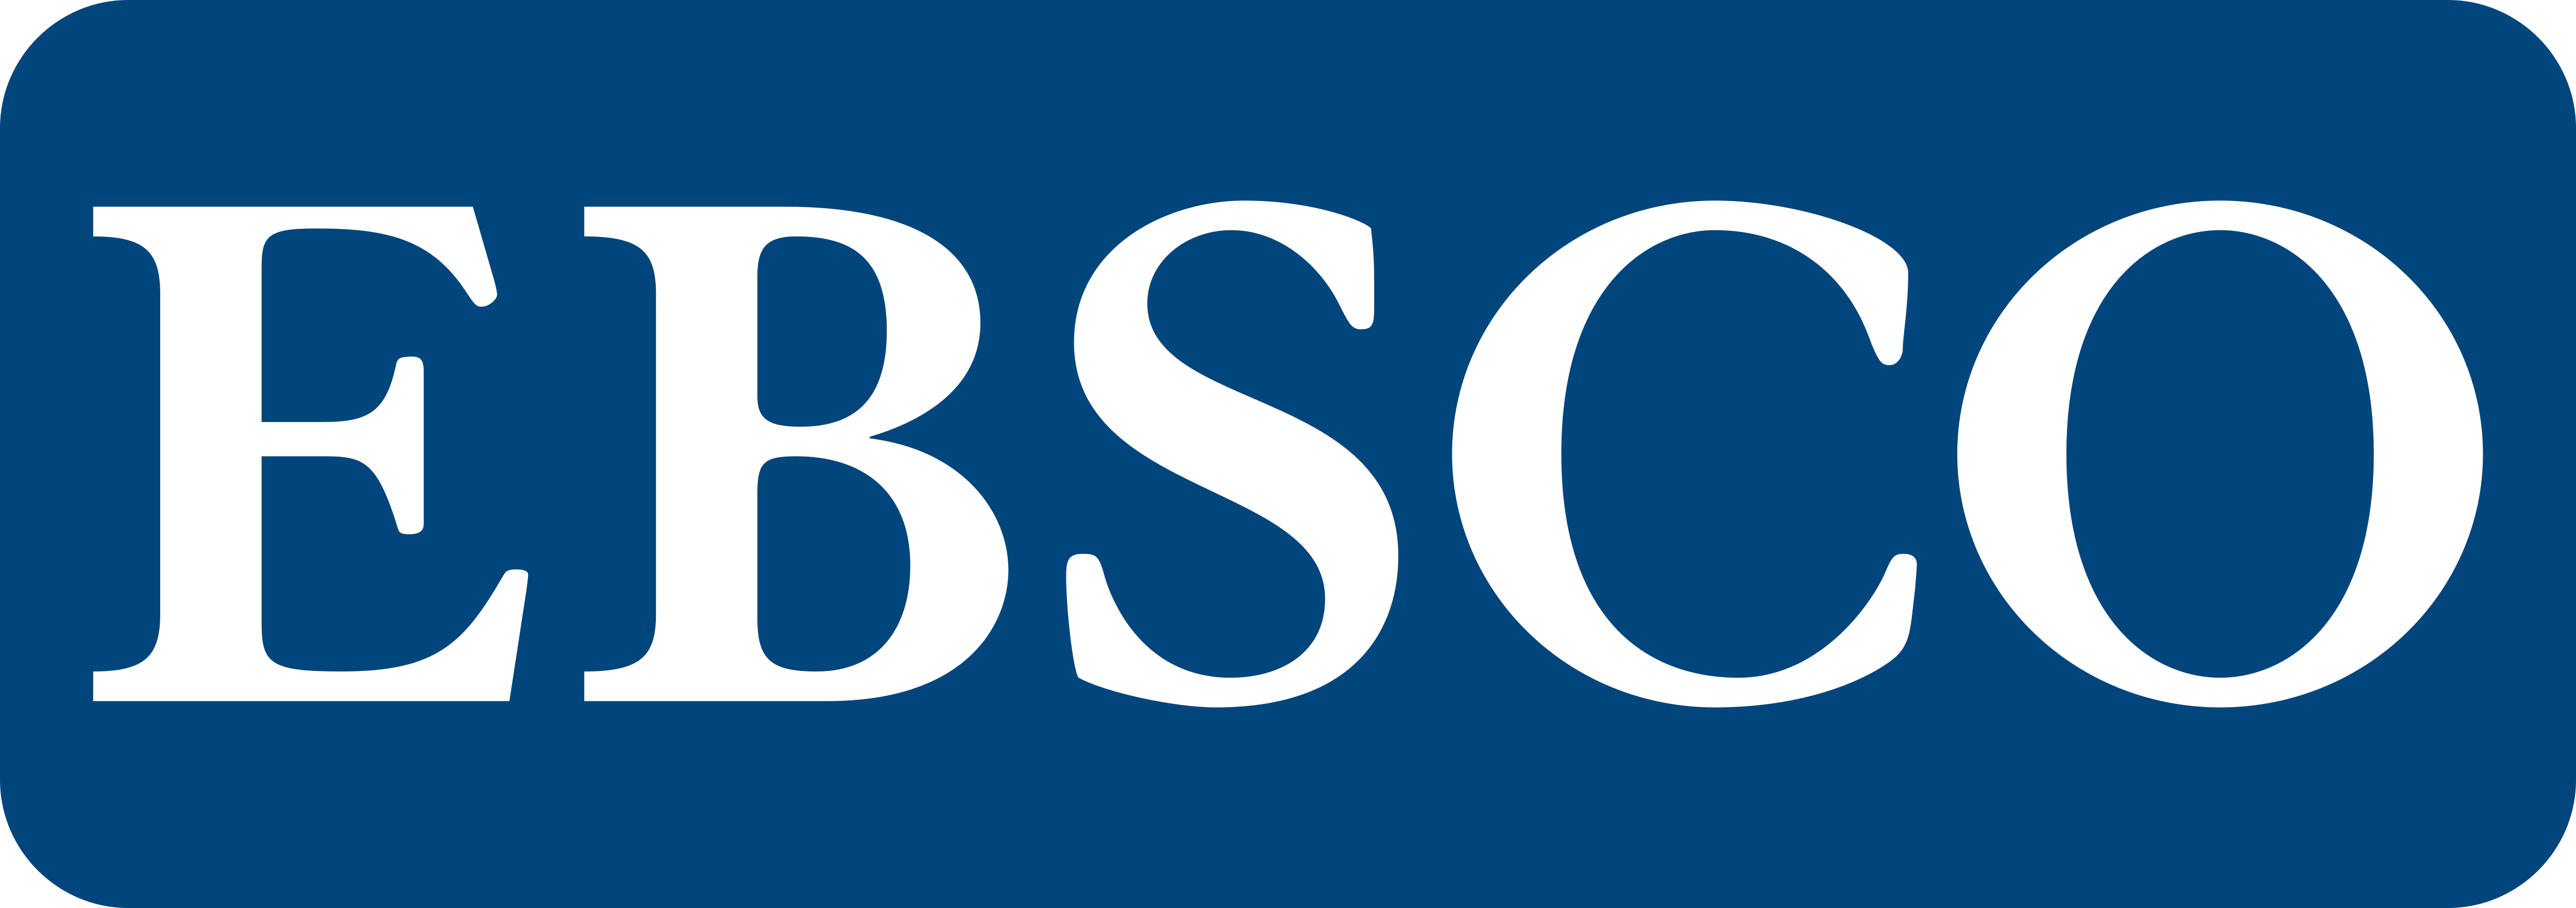 EBSCO_Logo.png